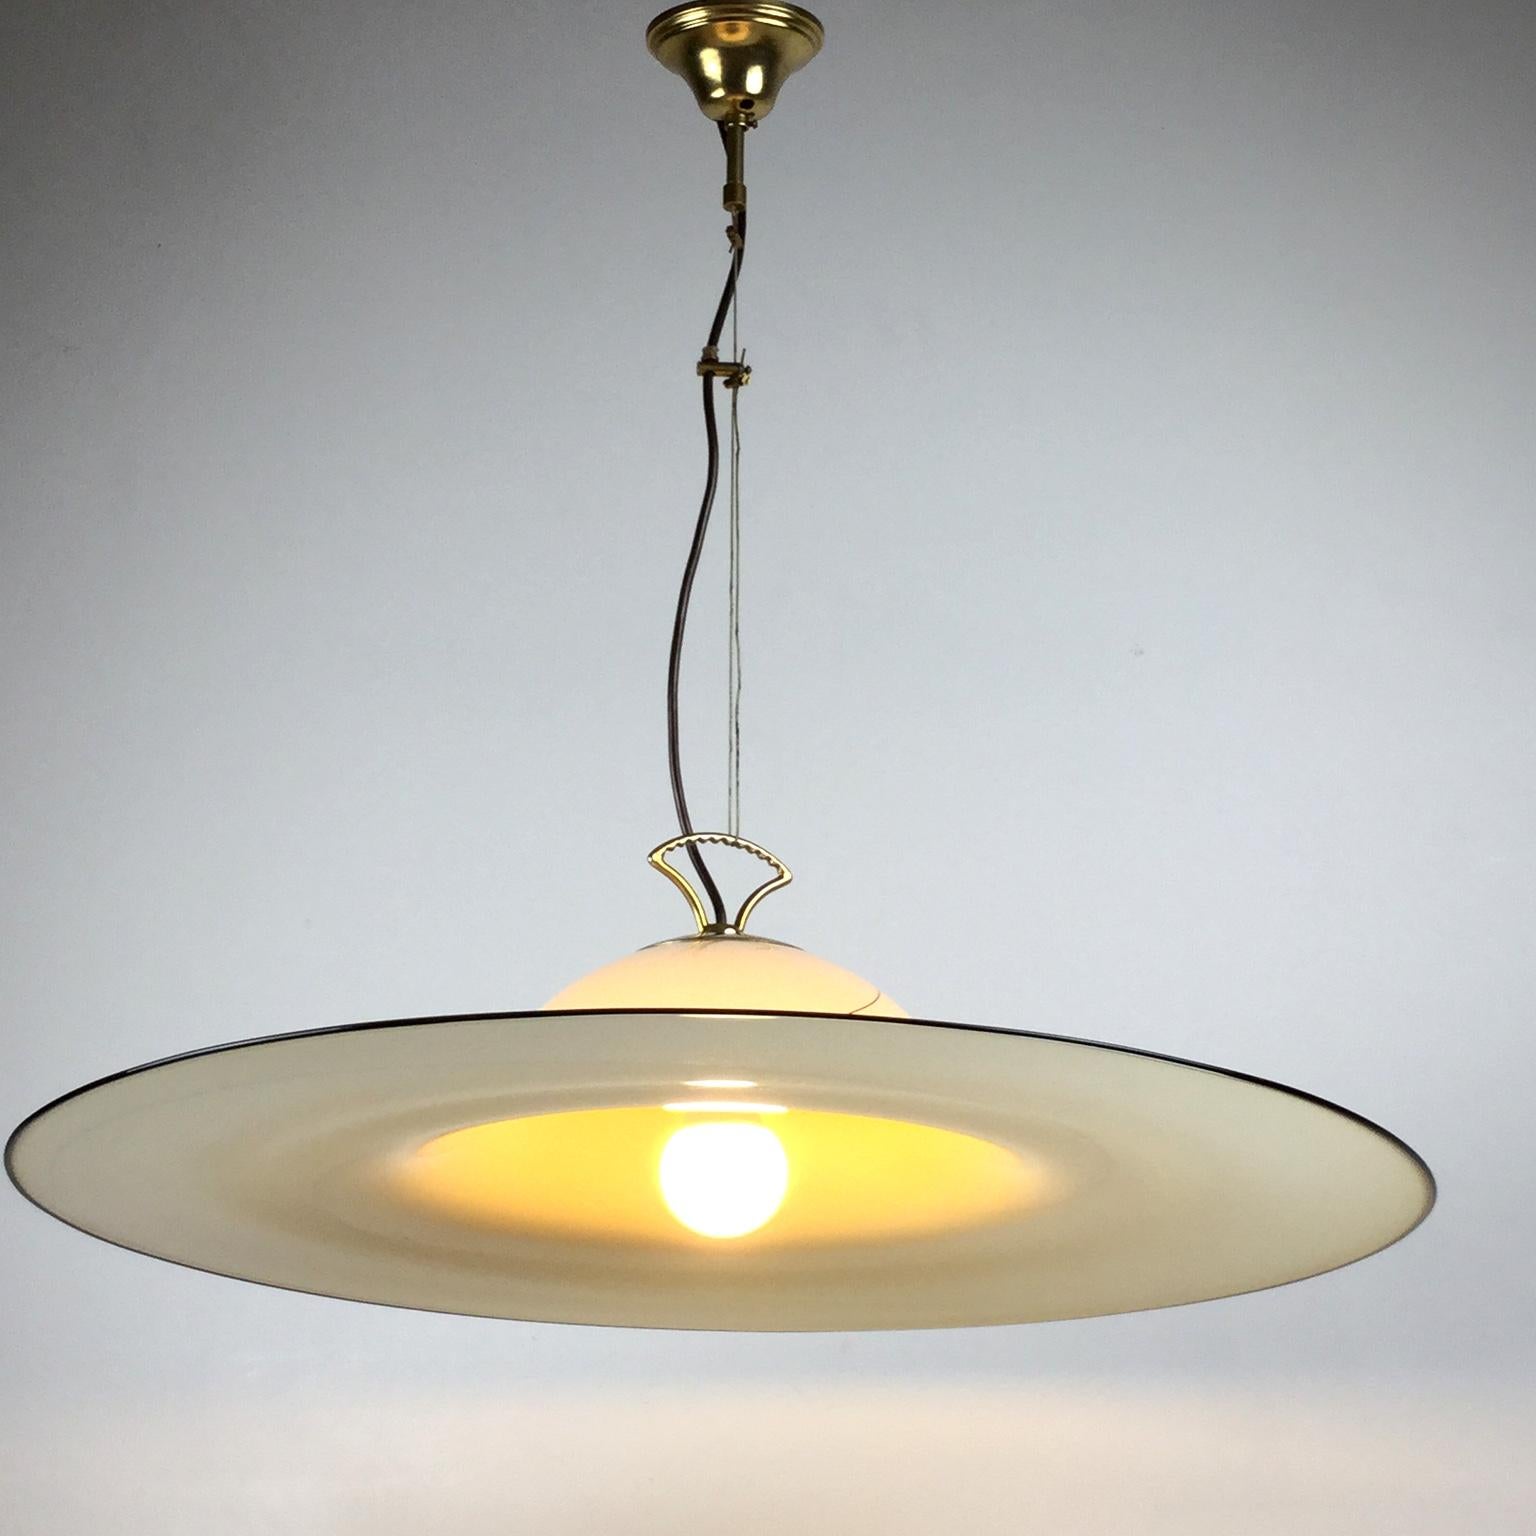 Mid-Century Modern 1980s Murano Italian Glass Pendant Lamp Attributed to Seguso Vetri d'Arte For Sale